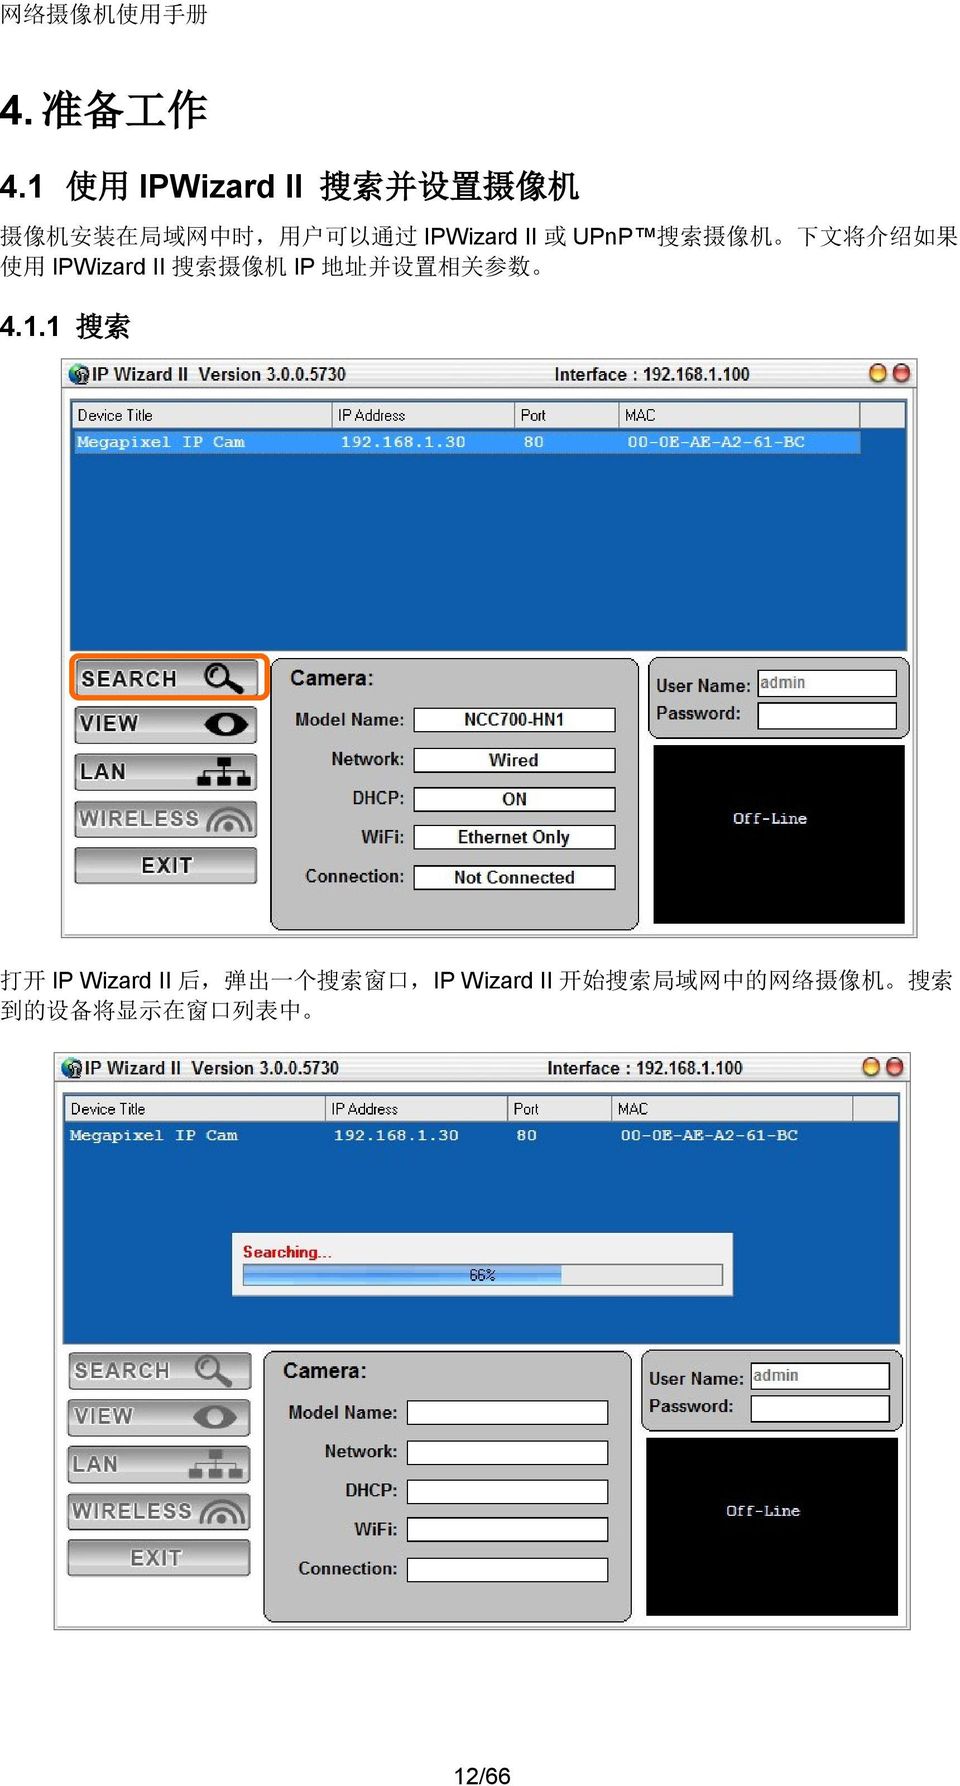 IPWizard II 或 UPnP 搜 索 摄 像 机 下 文 将 介 绍 如 果 使 用 IPWizard II 搜 索 摄 像 机 IP 地